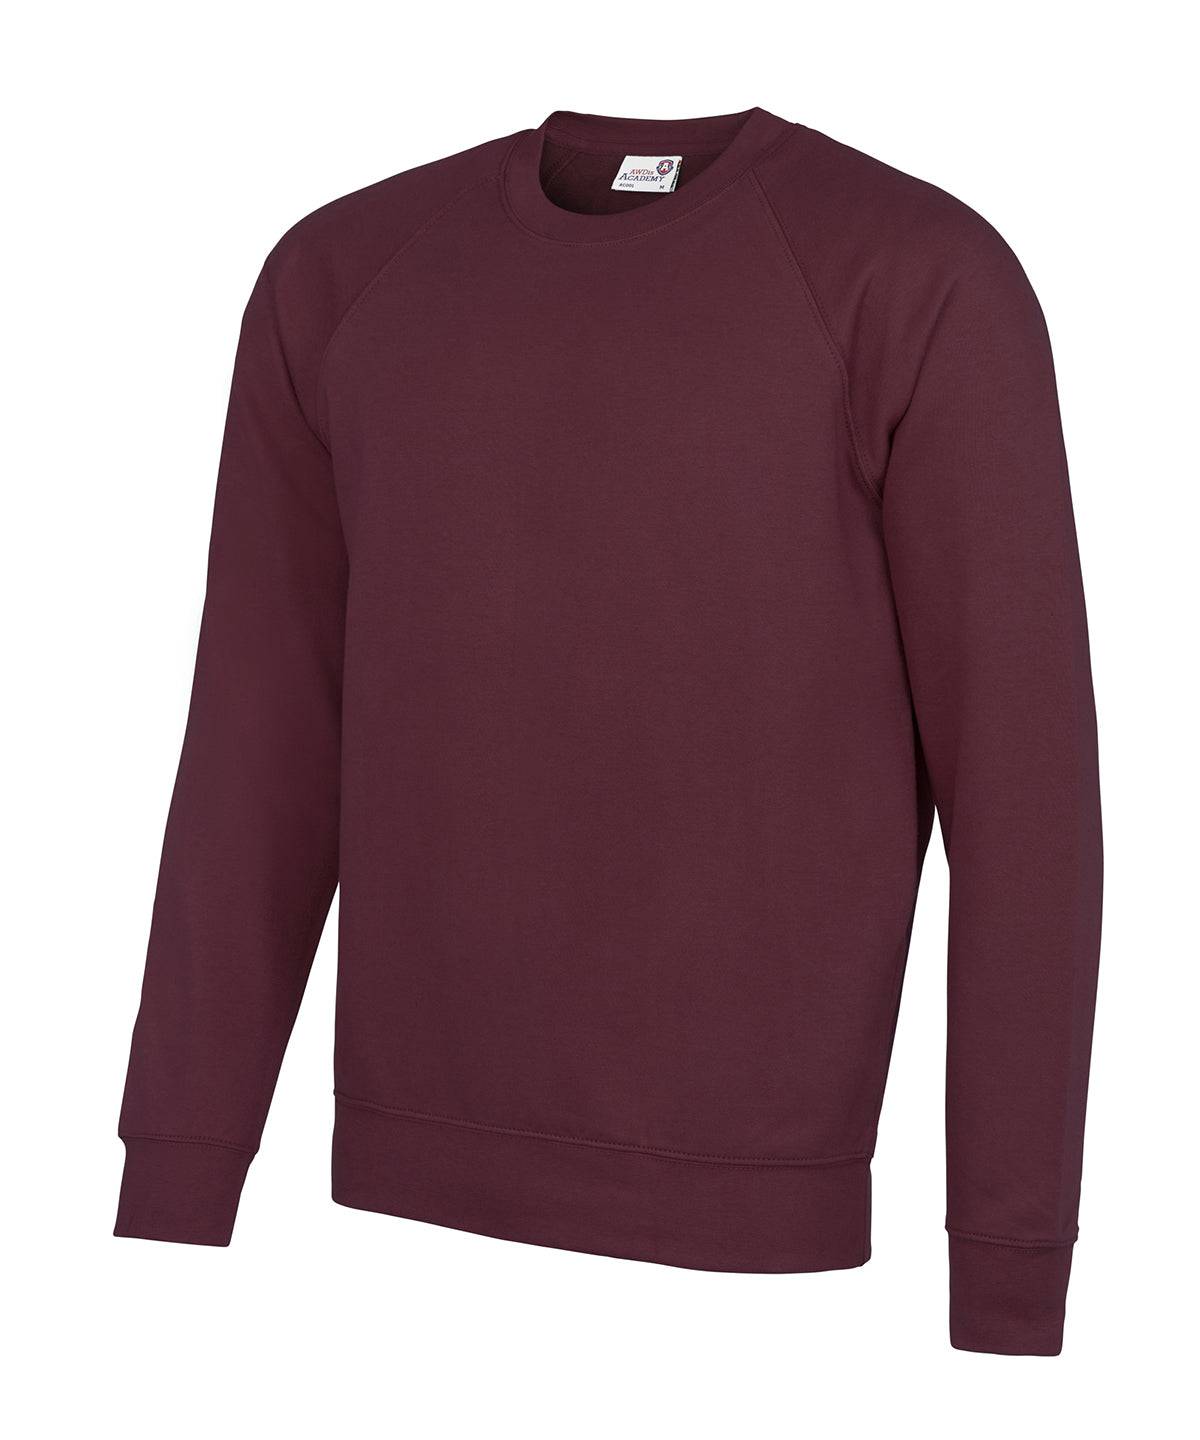 Academy Burgundy - Senior Academy raglan sweatshirt